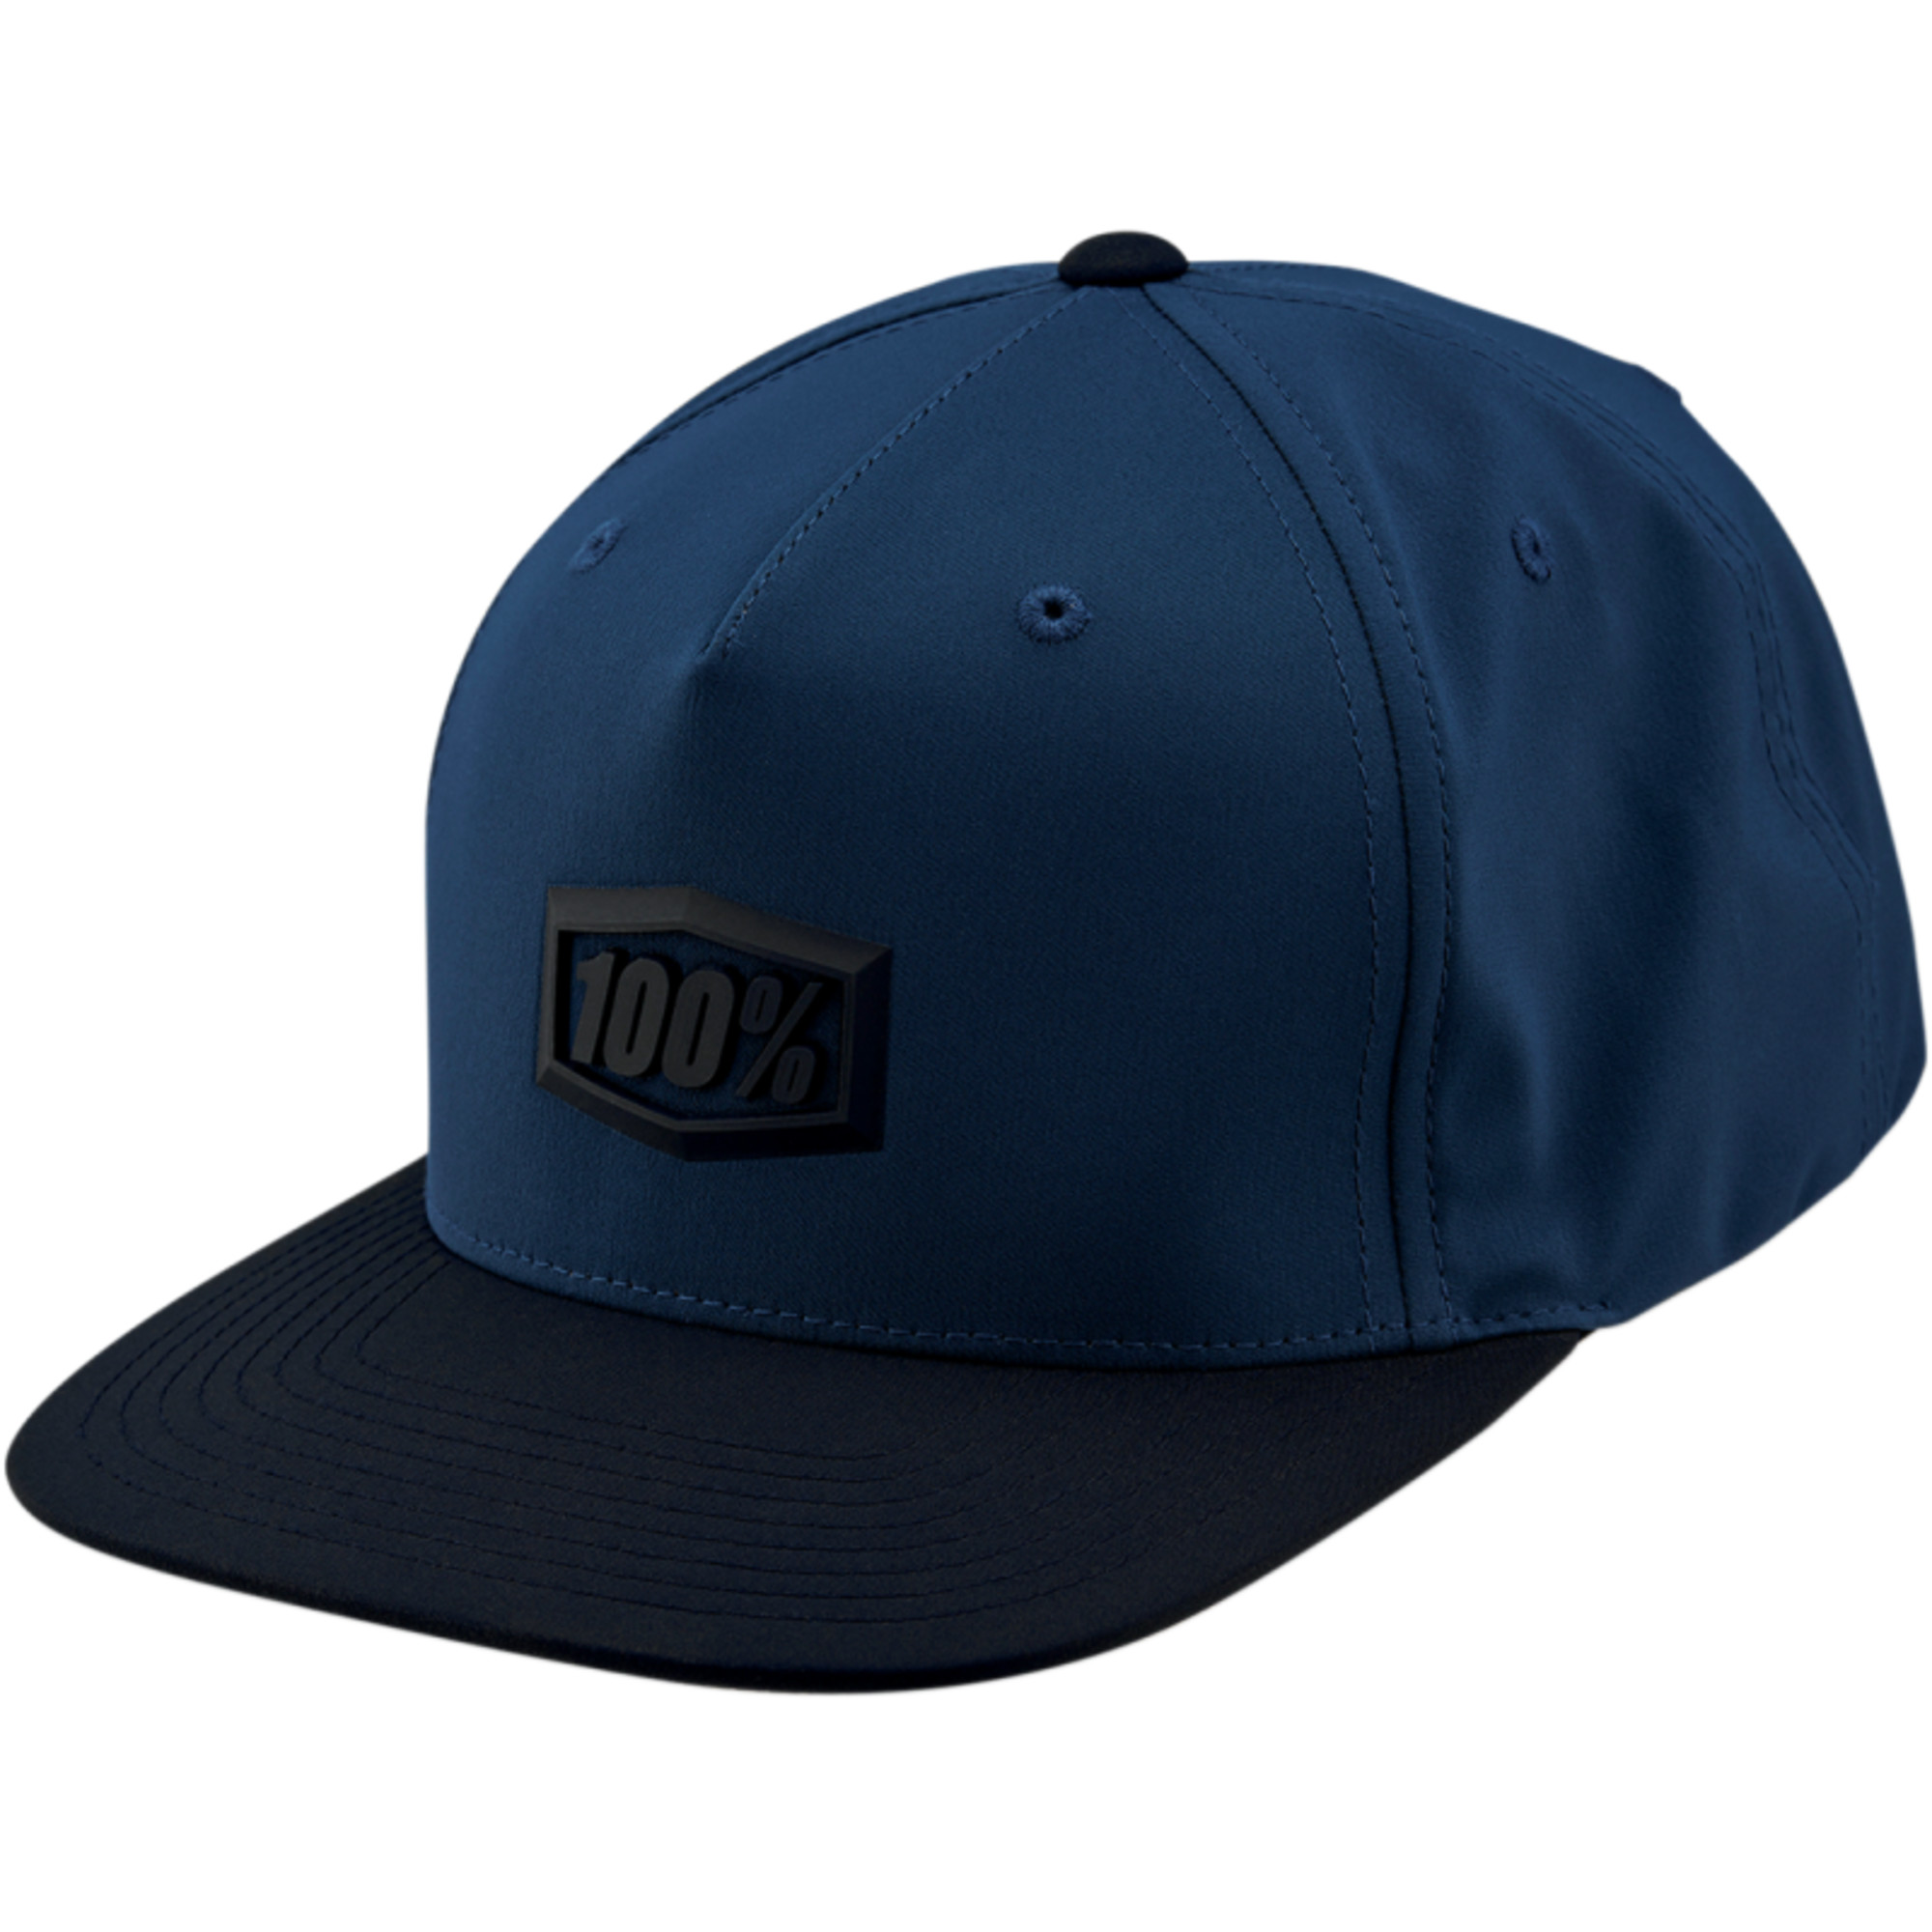 100 percent snapback hats for men enterprise